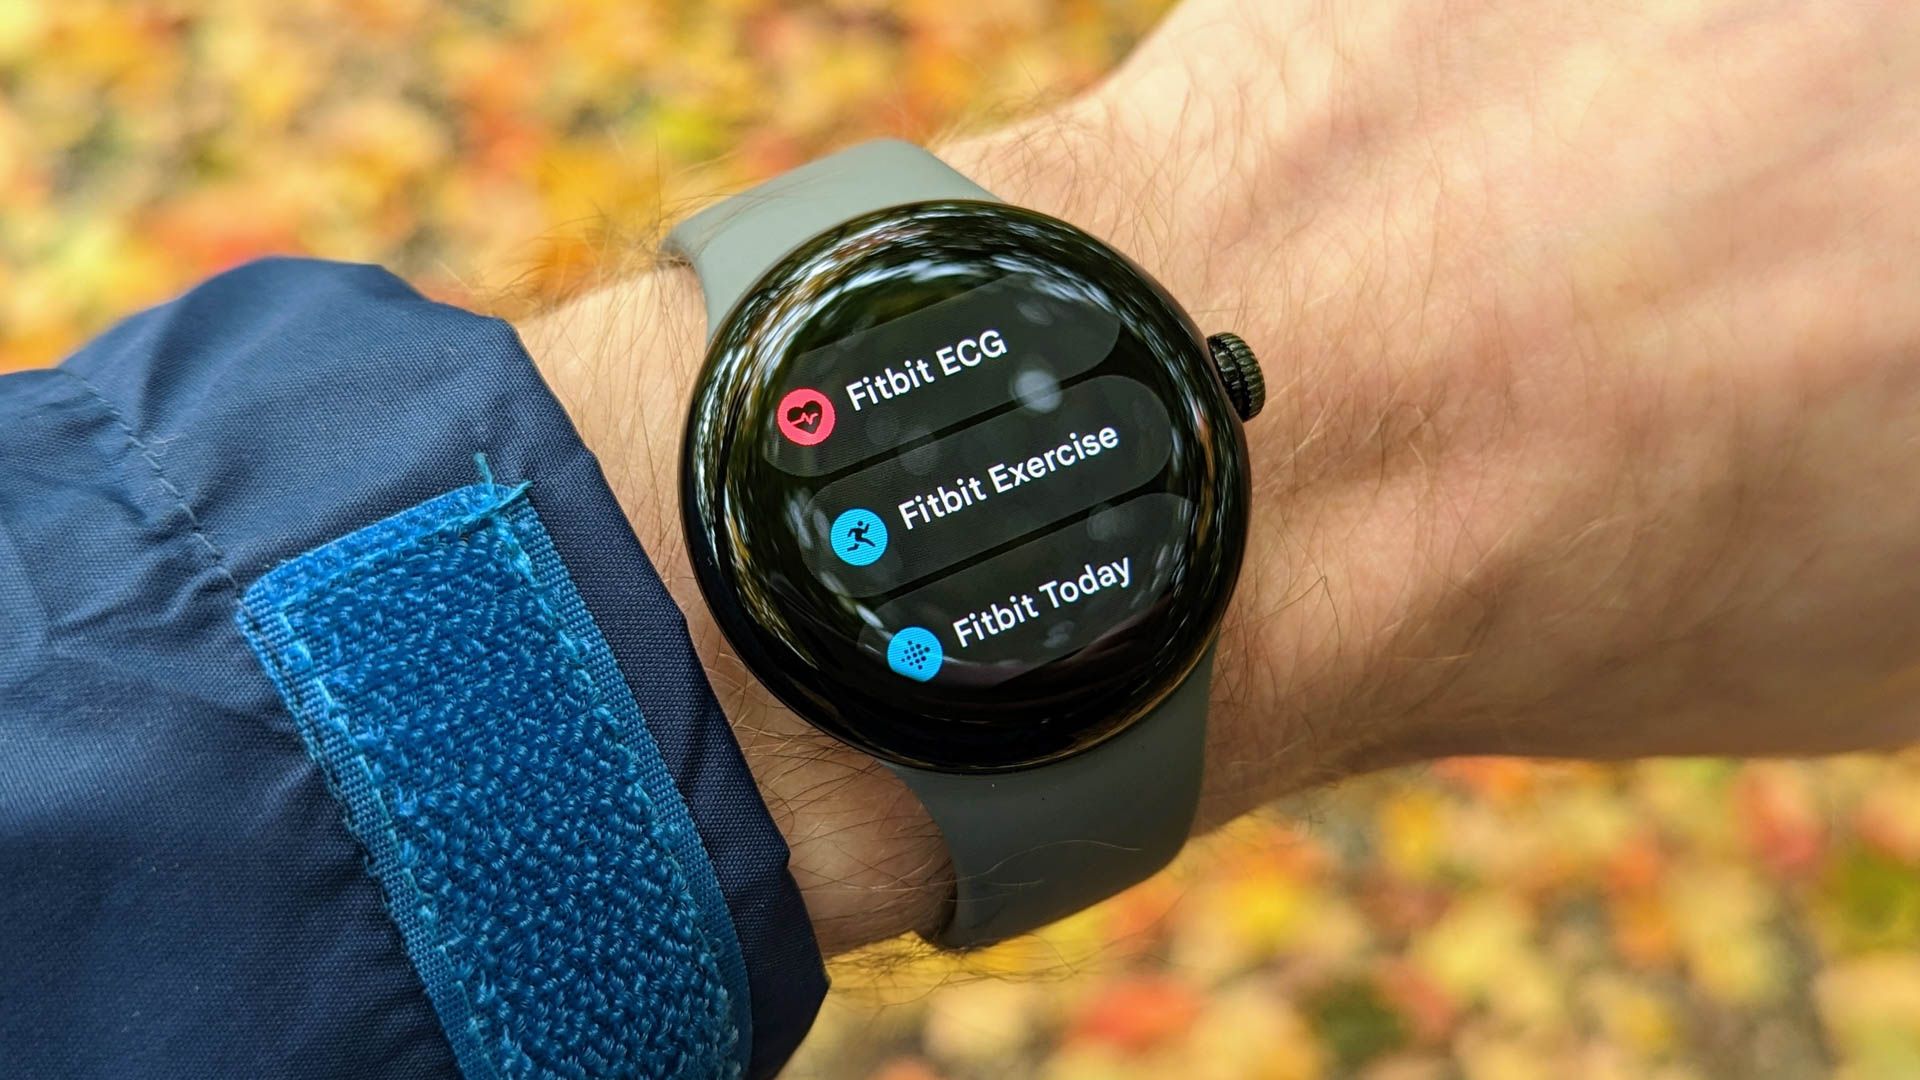 Fitbit apps on the Google Pixel Watch